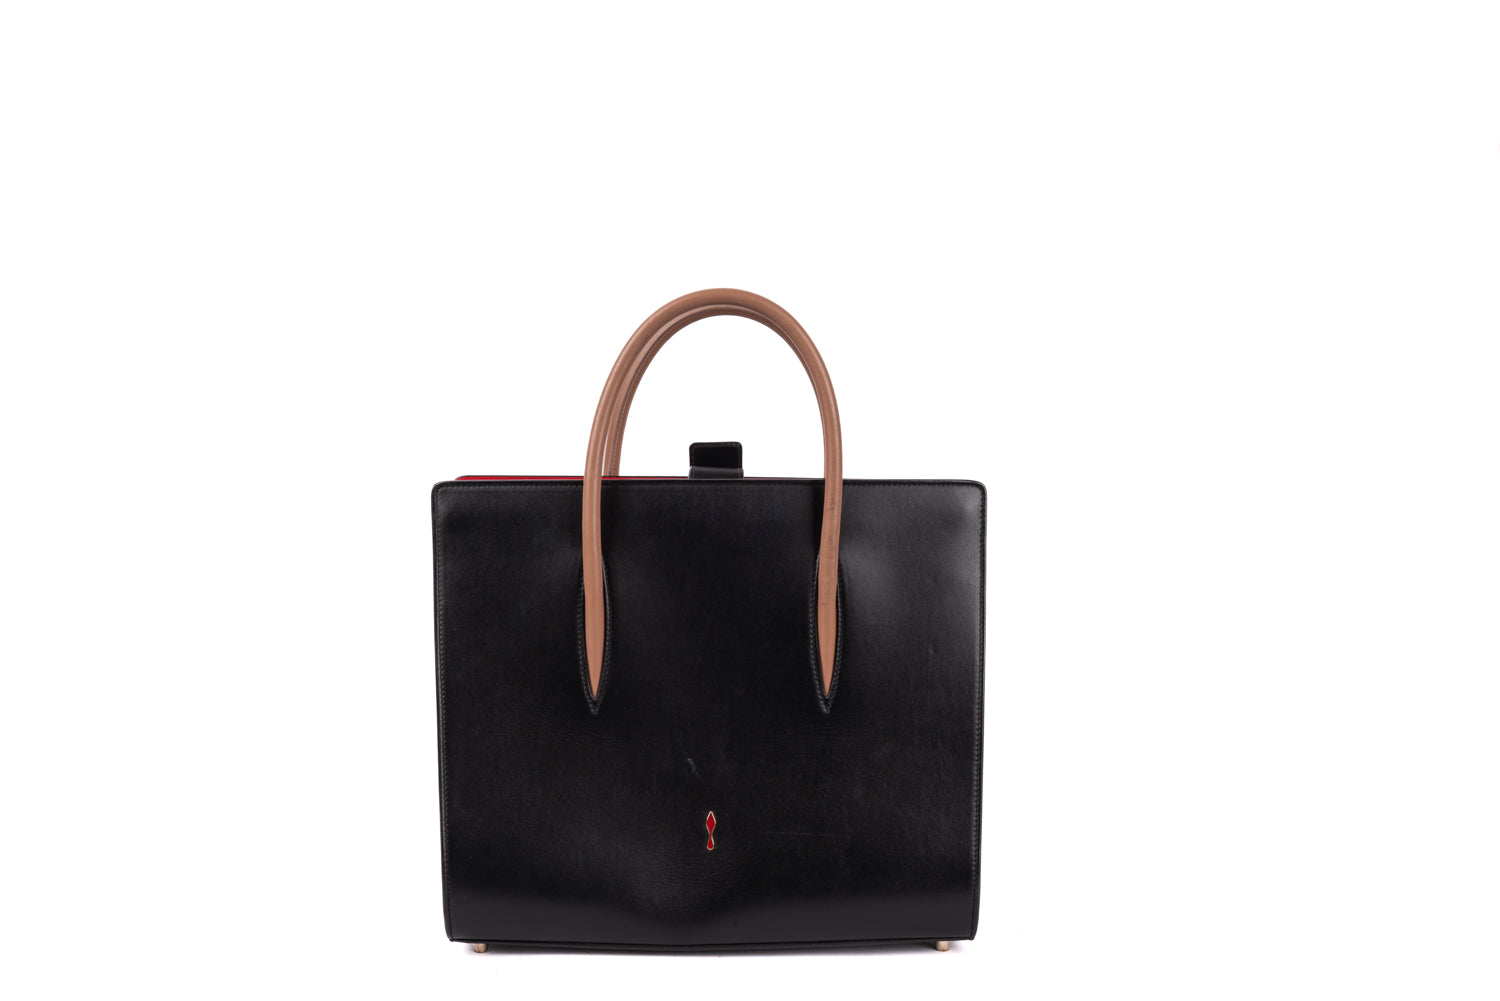 Christian Louboutin Black Leather Paloma Tote Bag